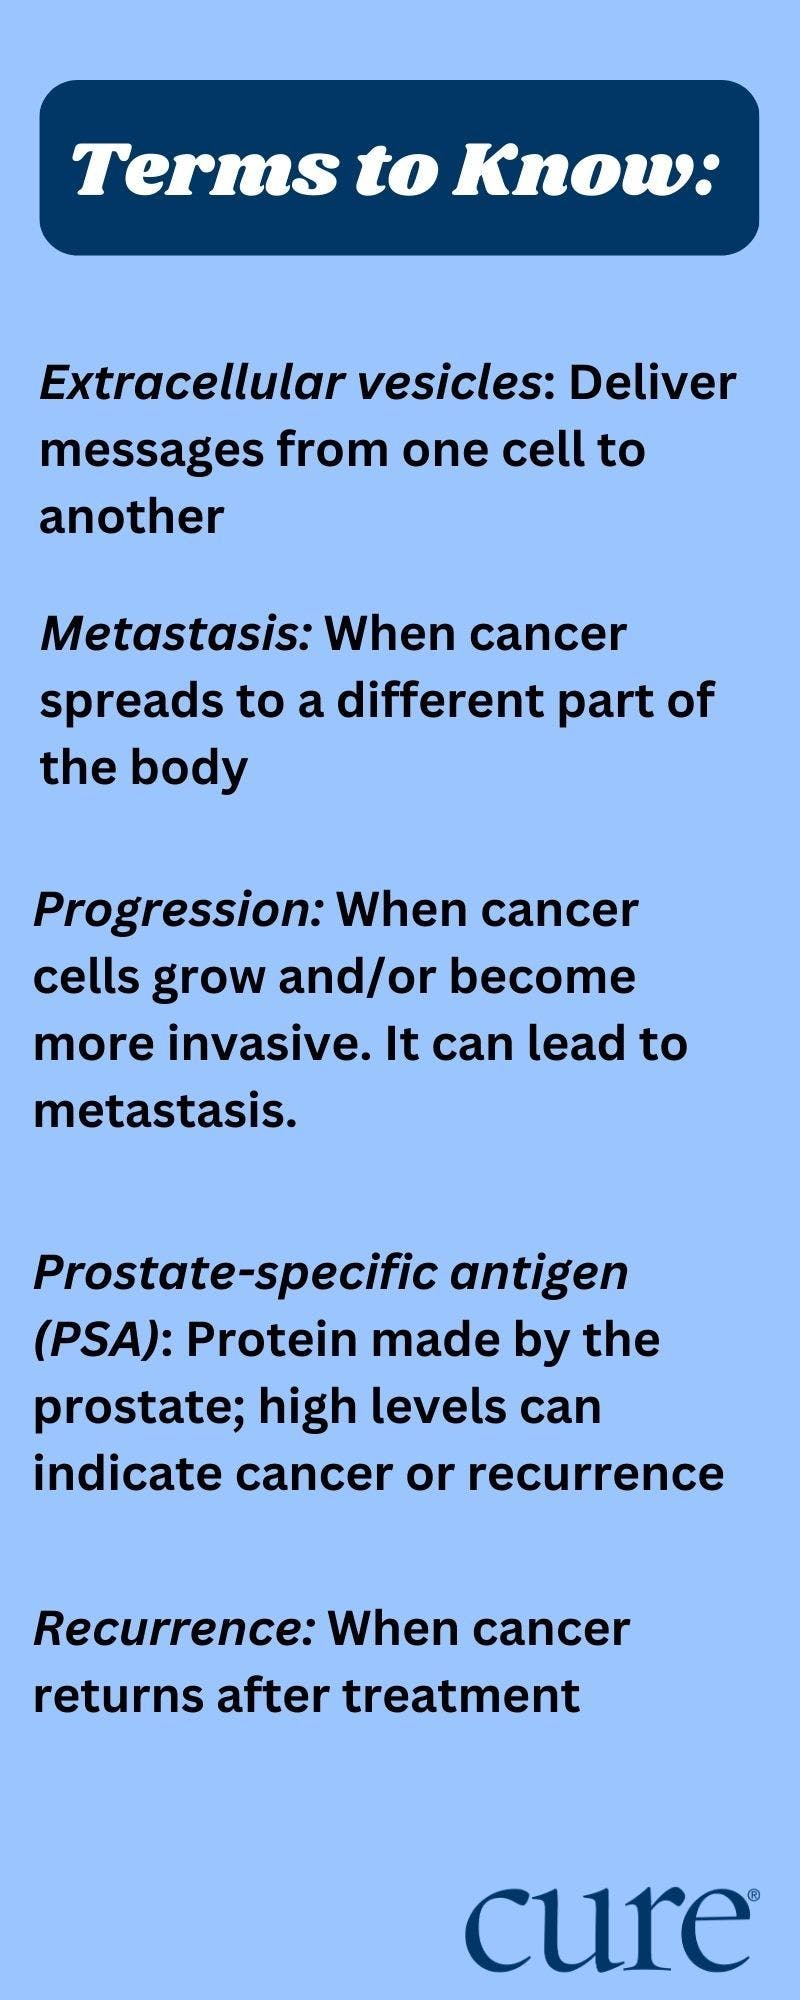 Definition of: extracellular vesicles, metastasis, progression, prostate-specific antigen, recurrence